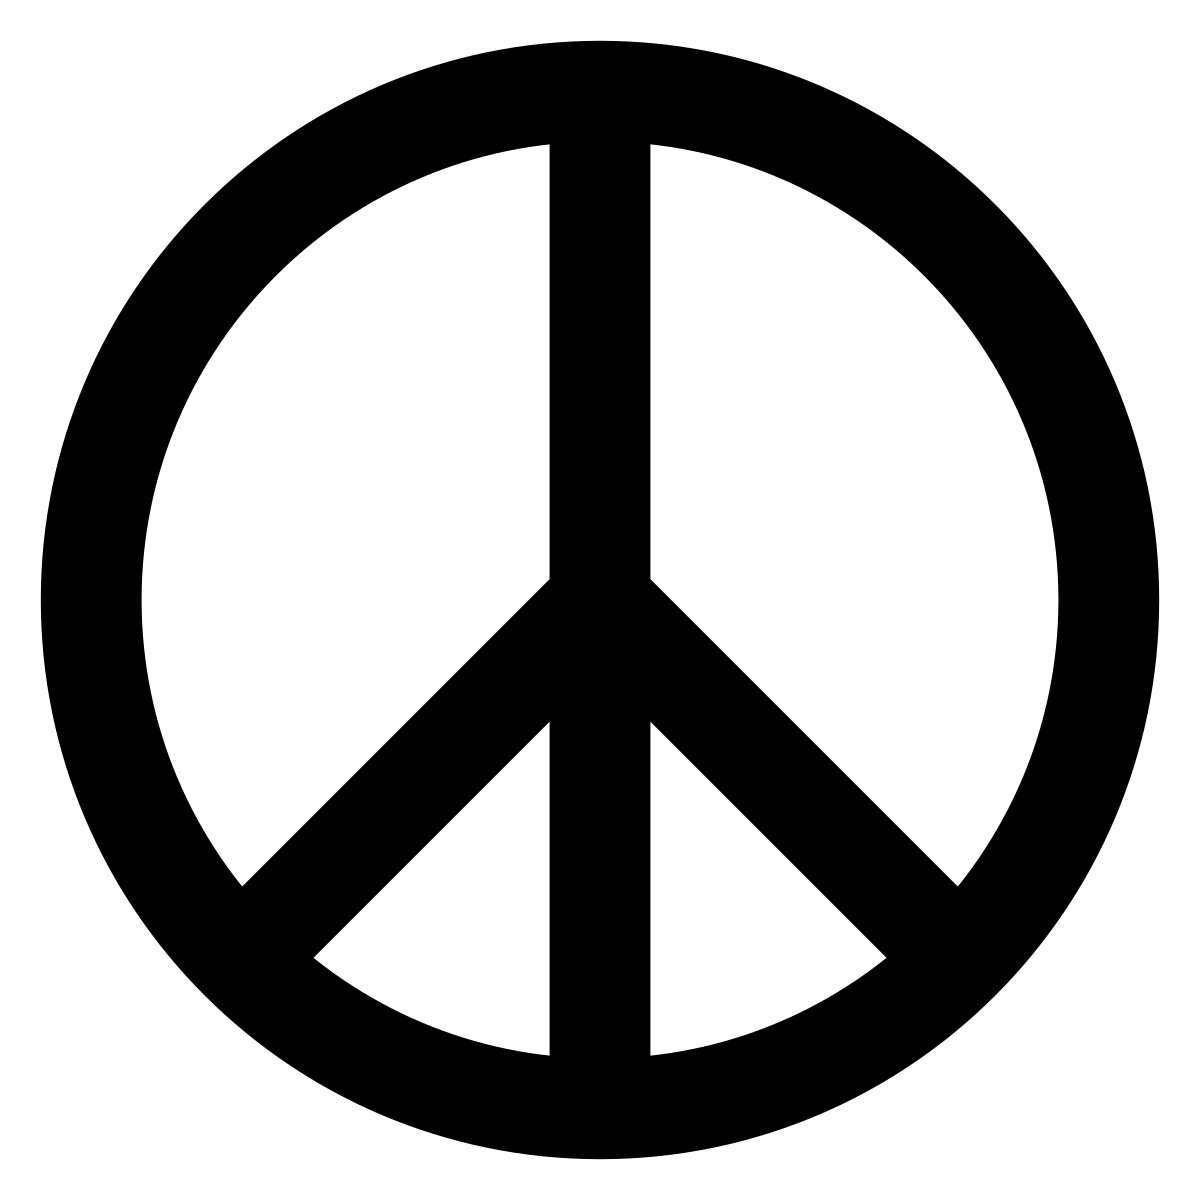 Broken Circle Logo - Peace symbols